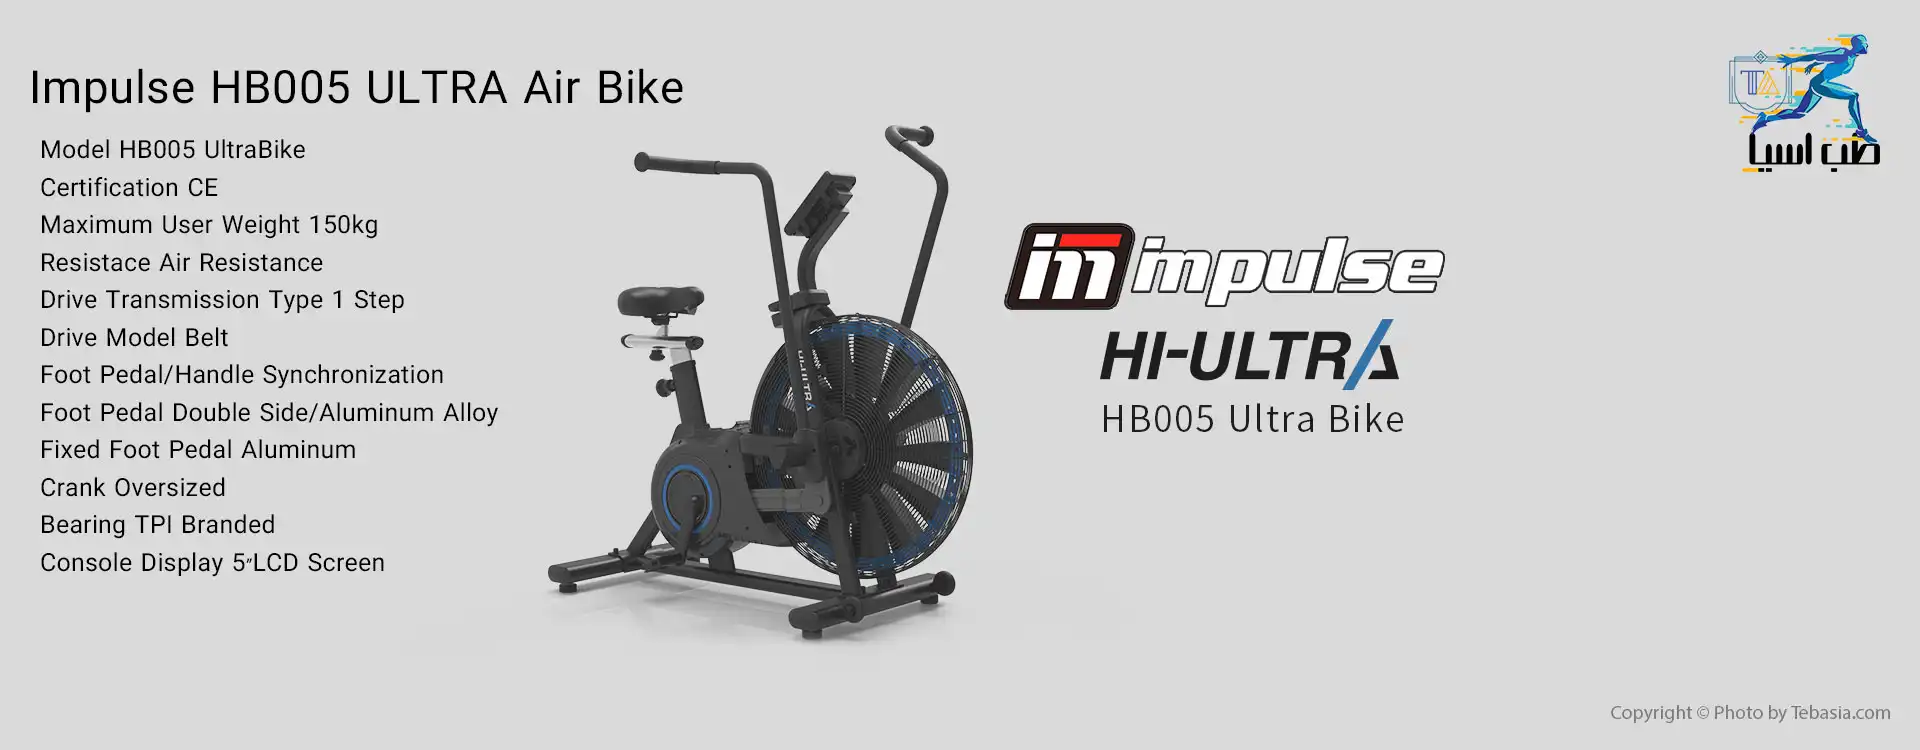 Impulse HB005 ULTRA Air Bike Tebasia